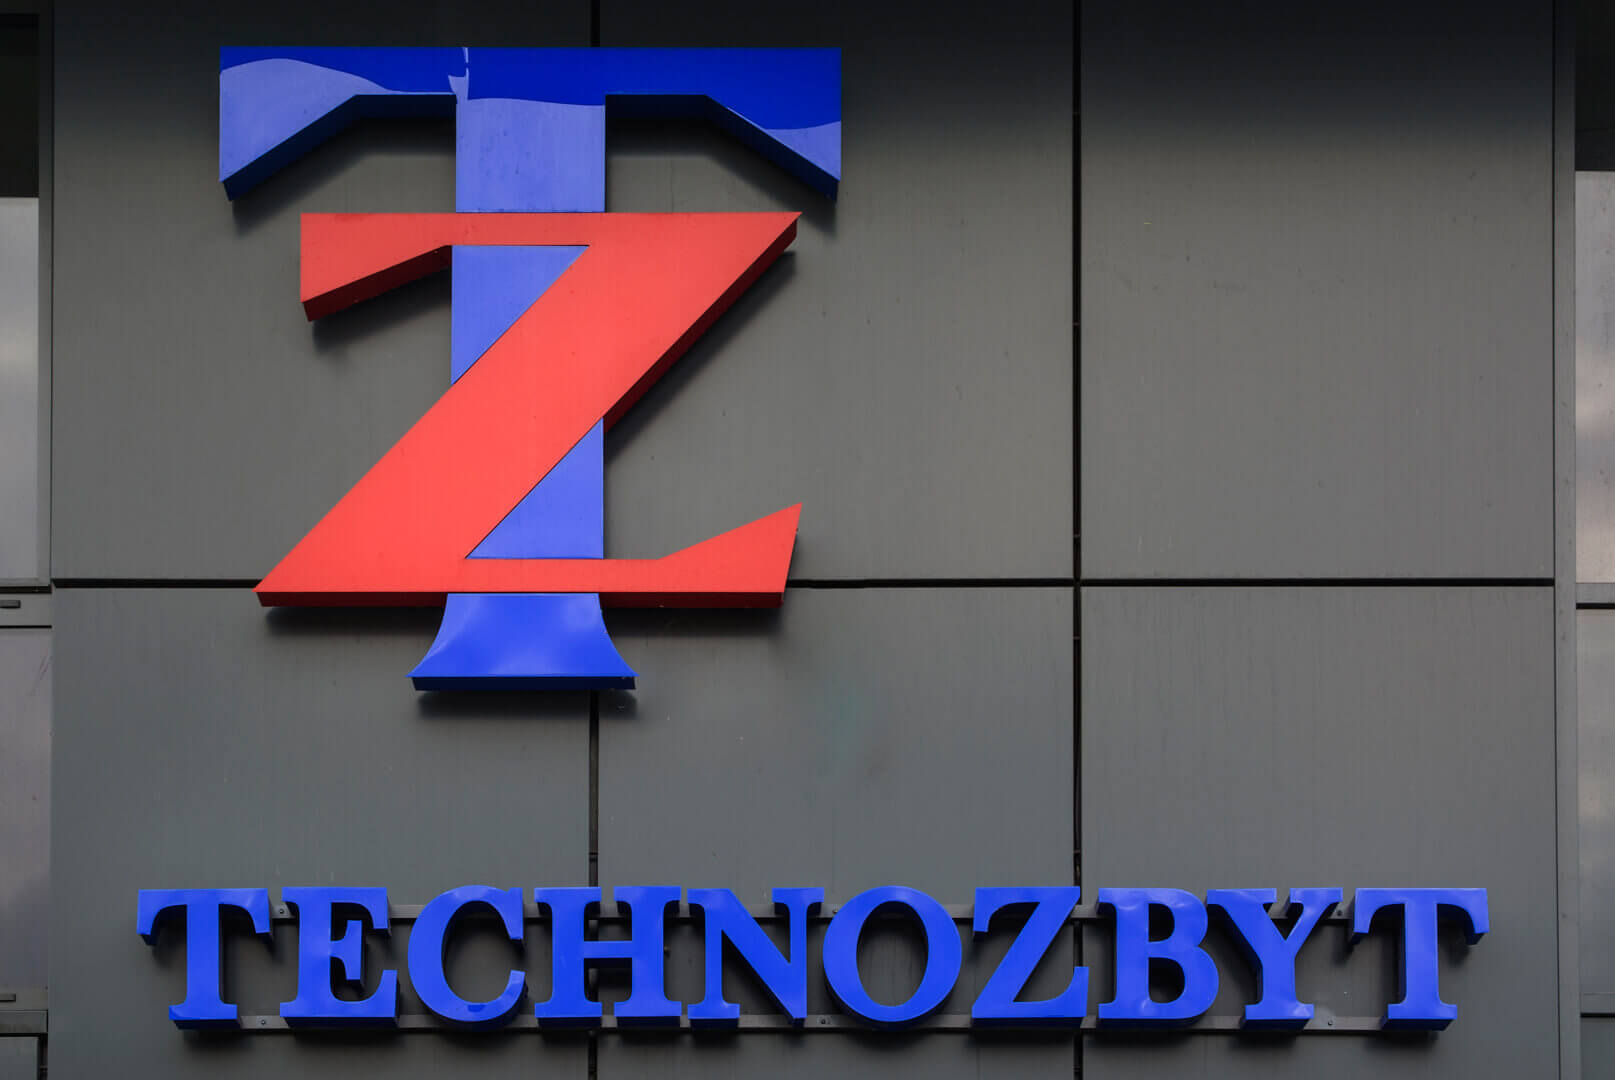 Technozbyt - Technozbyt - Spatial luminous letters placed on elevation